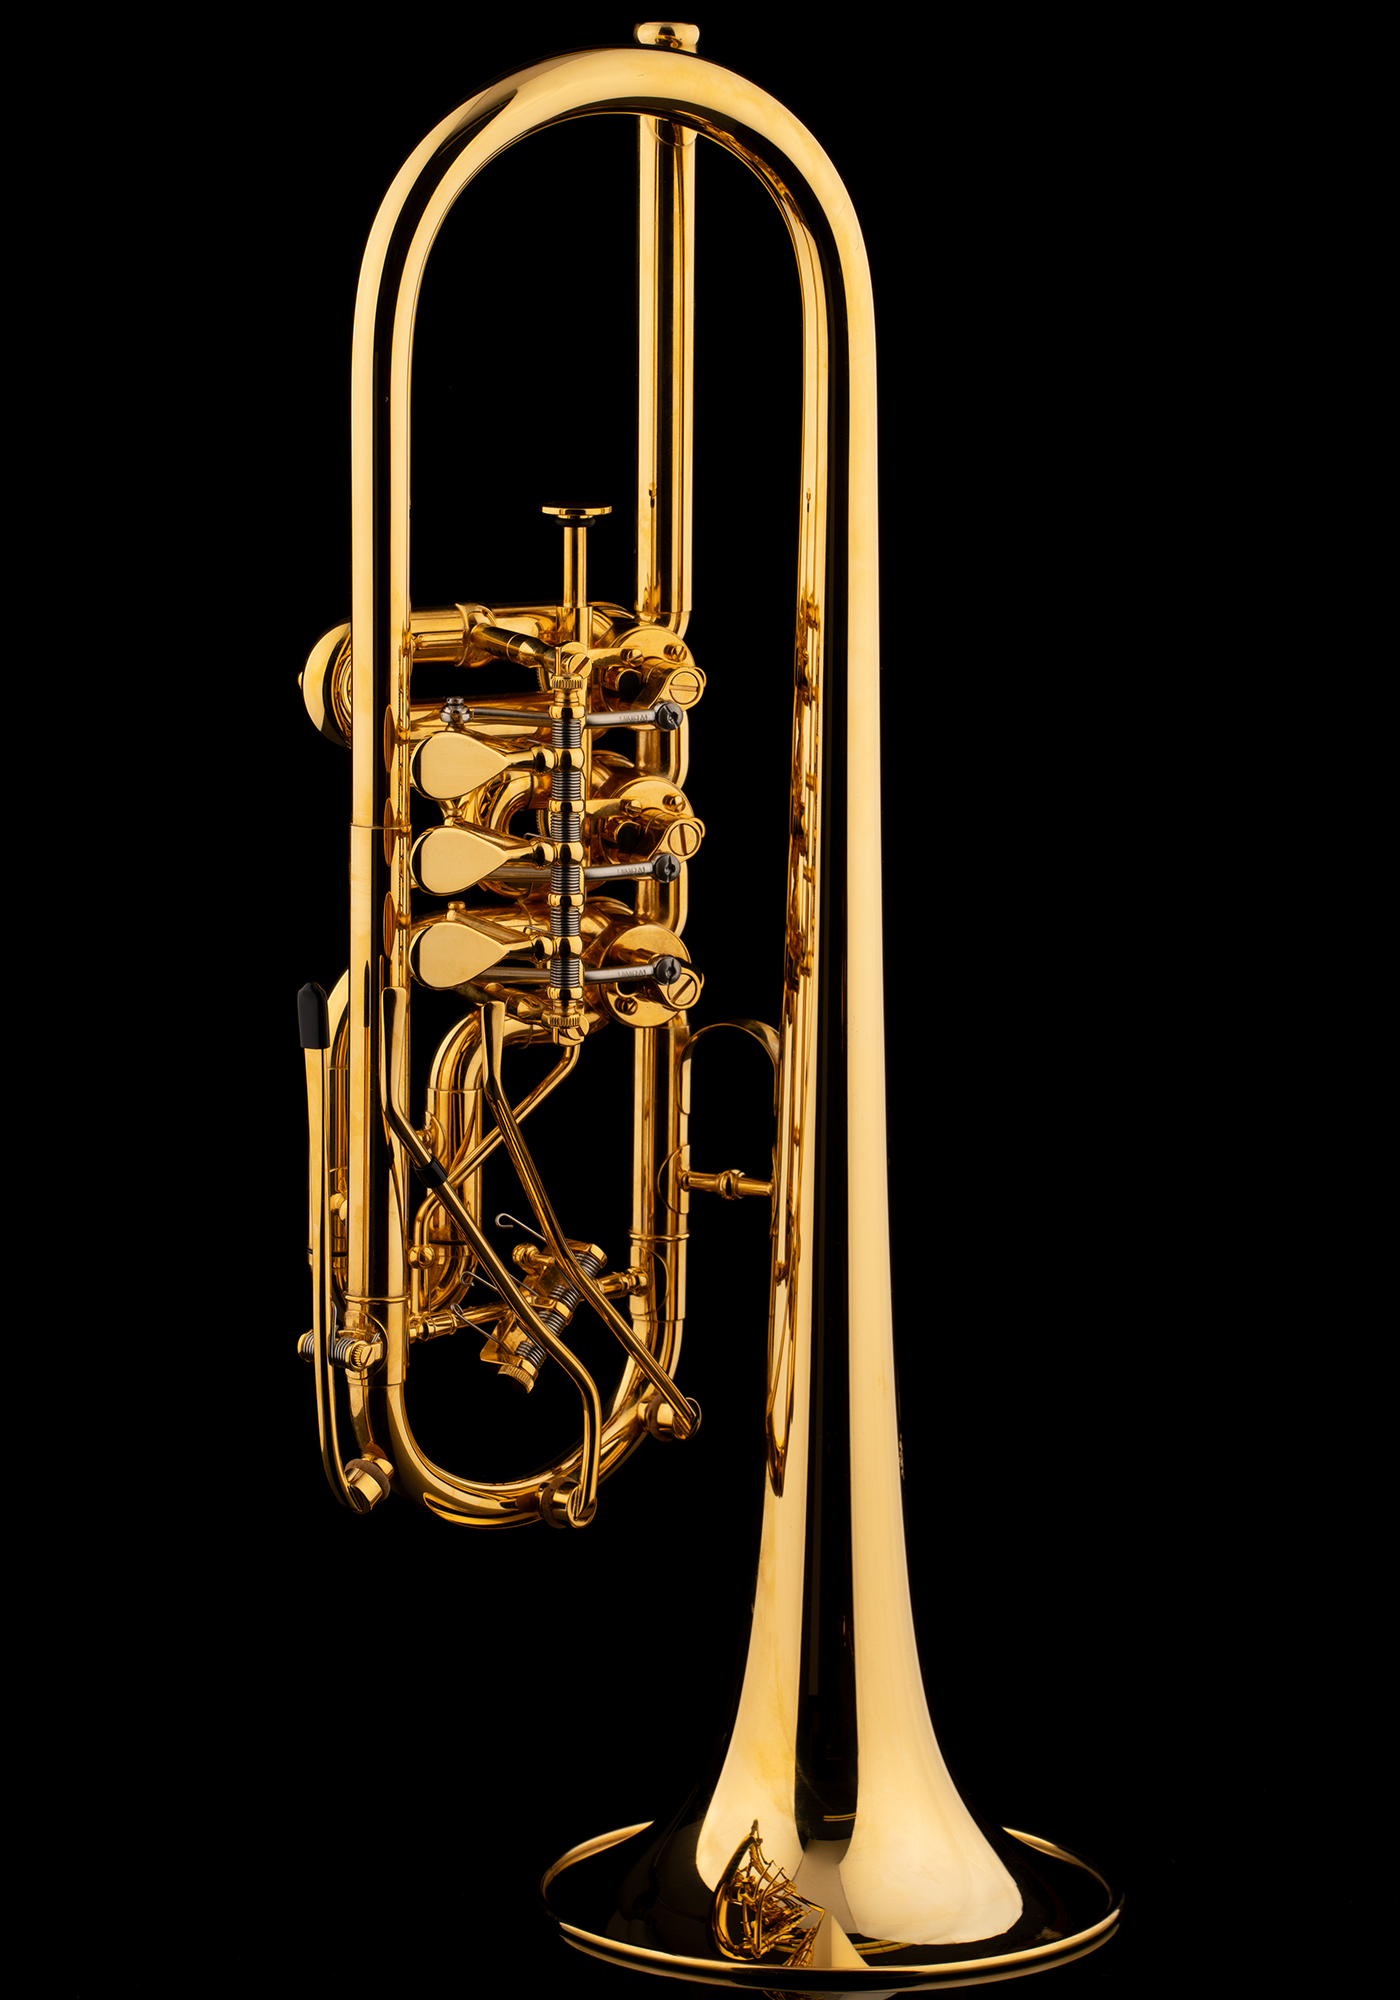 Schagerl C-Trumpet "WIEN 2021" gold plated